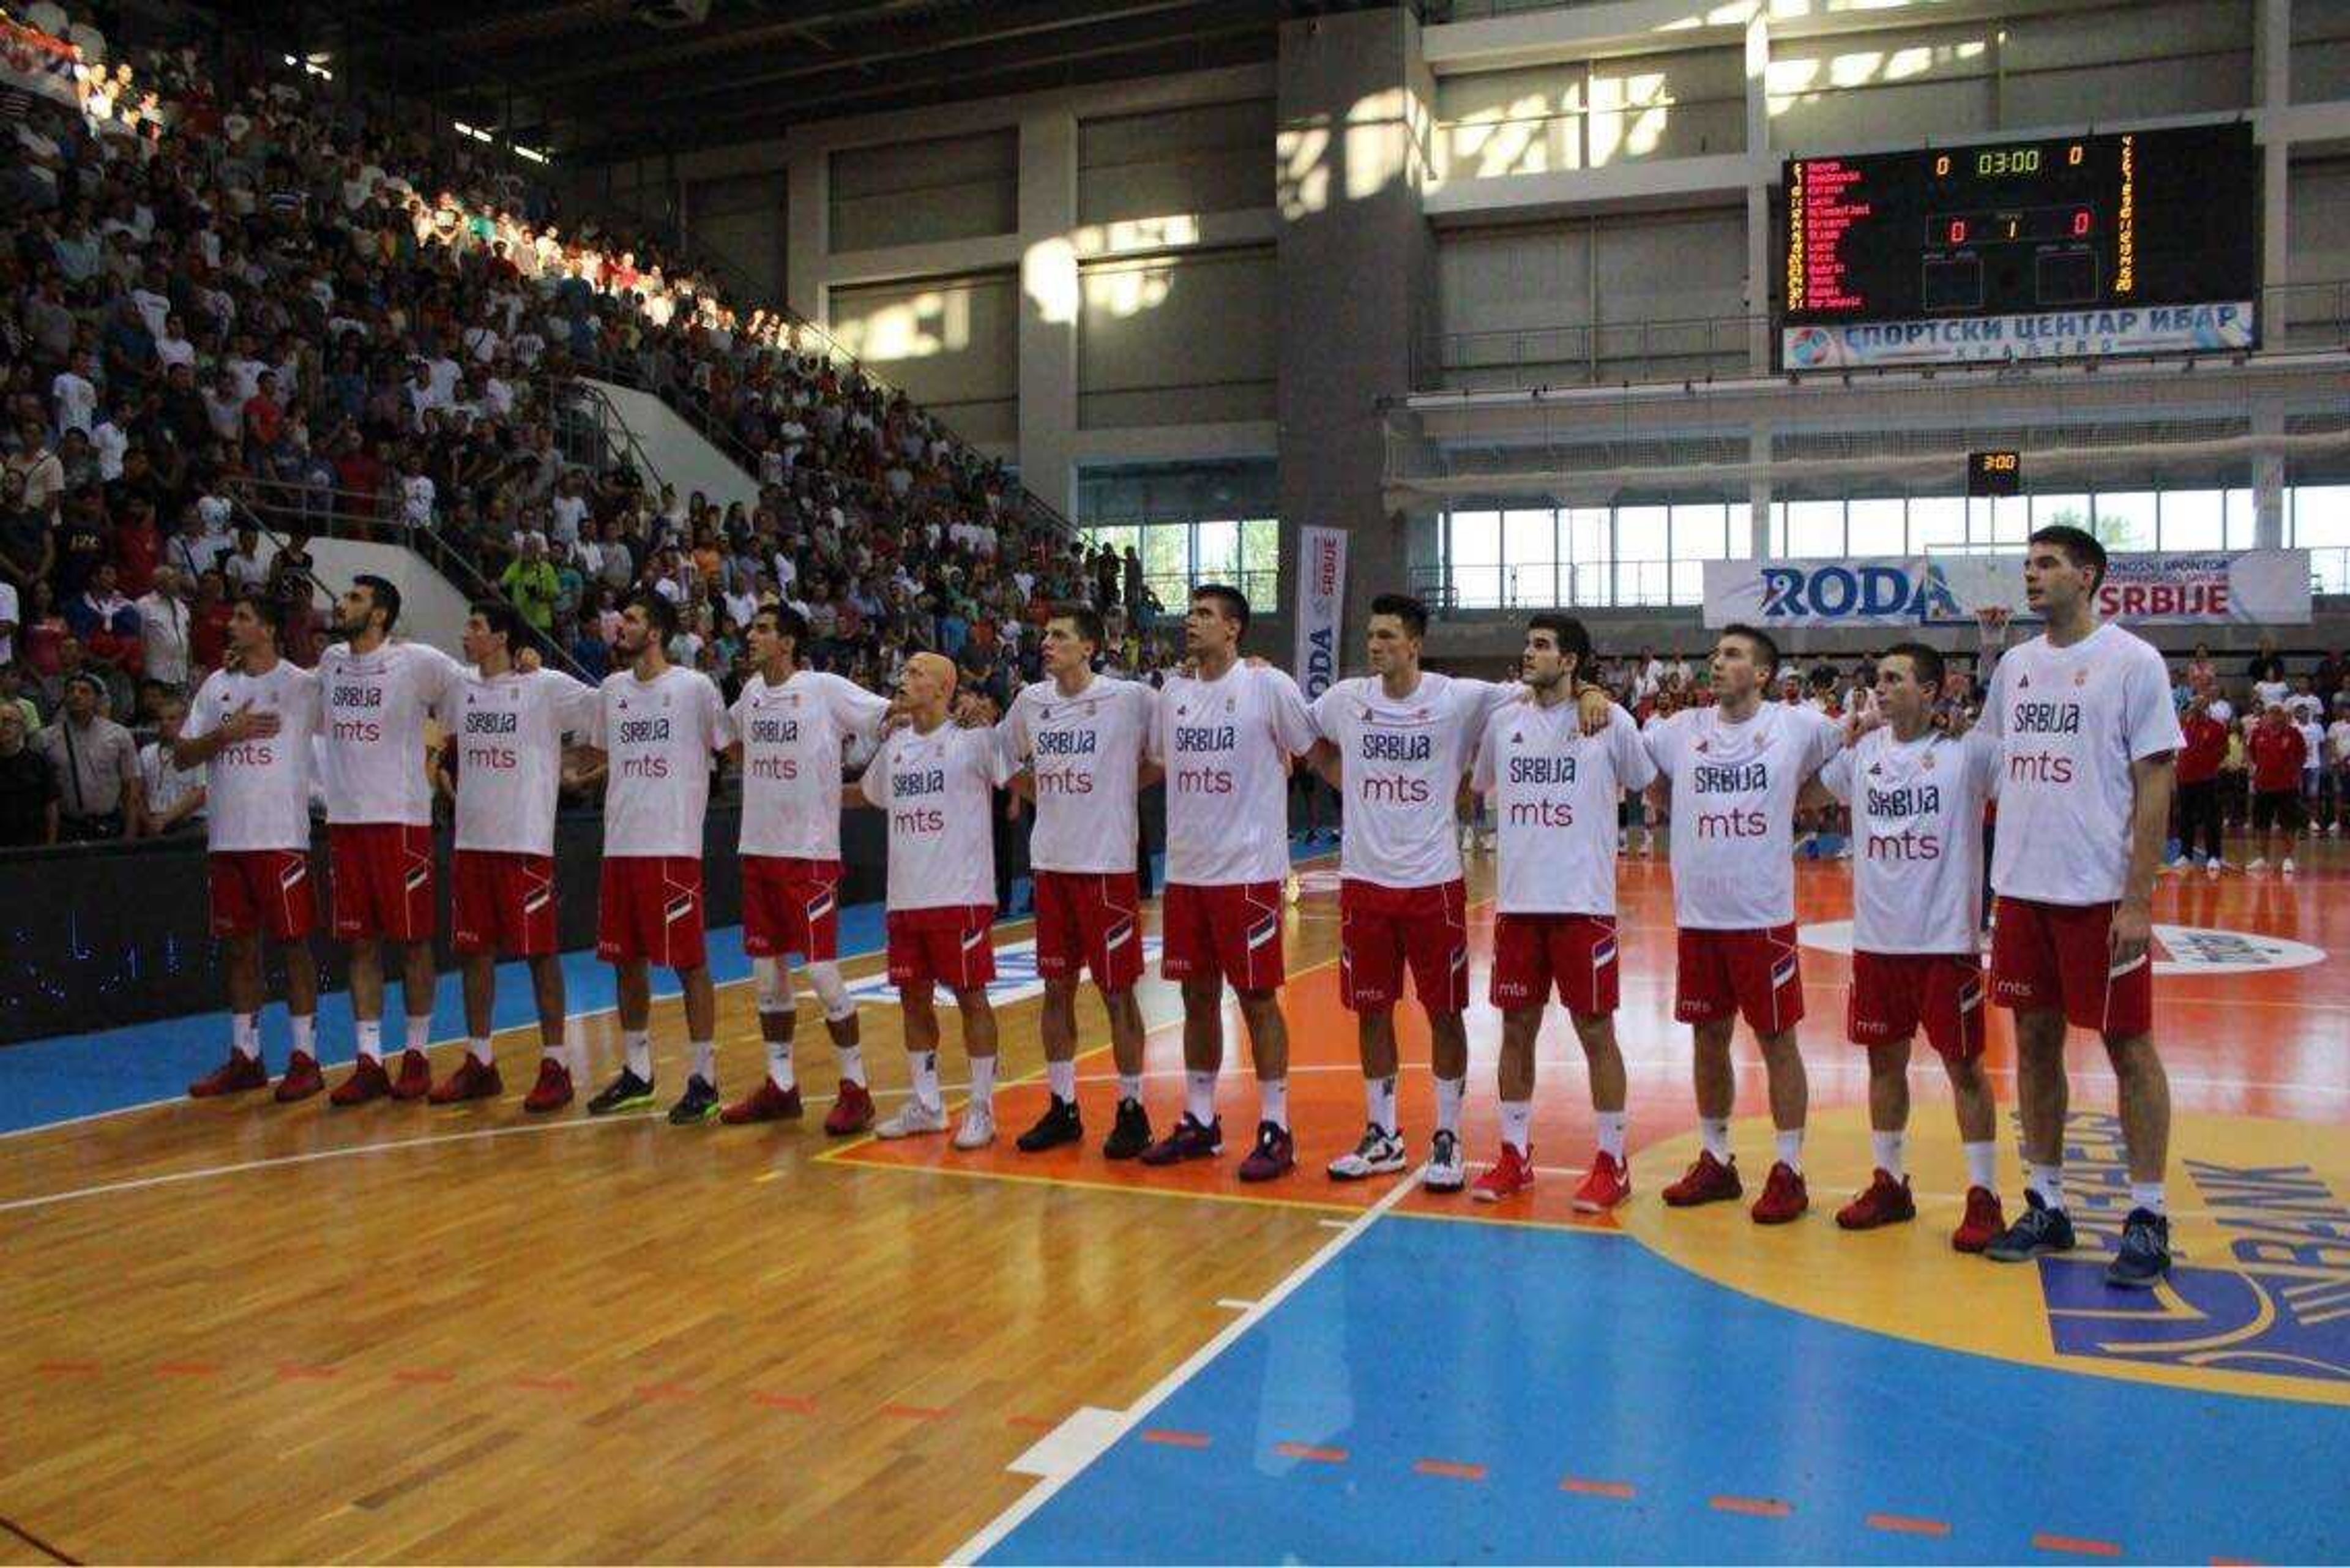 Serbian National Team during the pregame pledge of allegiance.